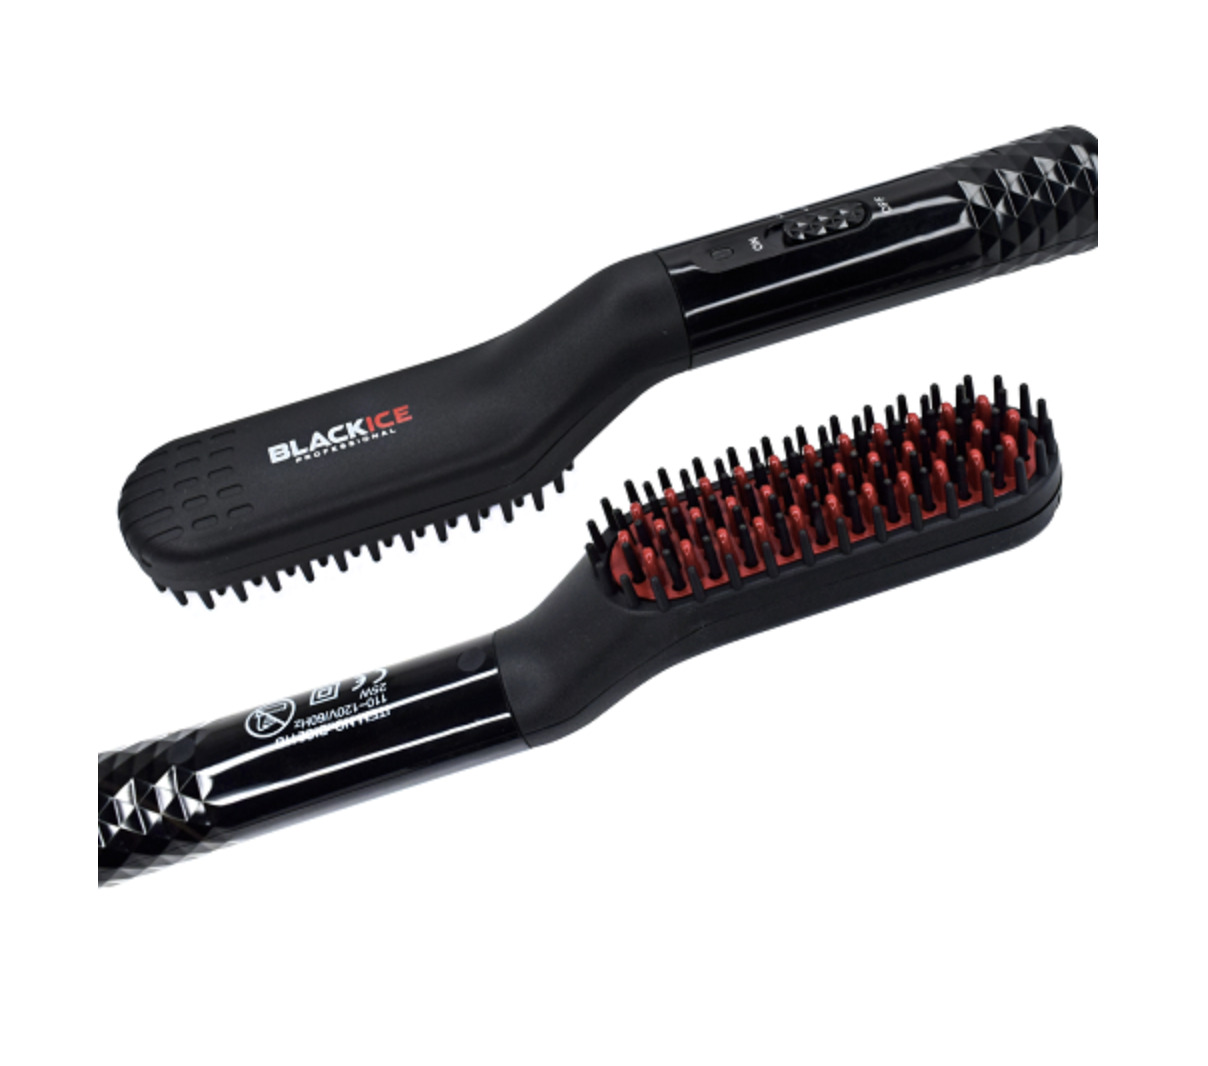 Blackice Professional Beard & Hair Electric Straightening Hot Comb Brush